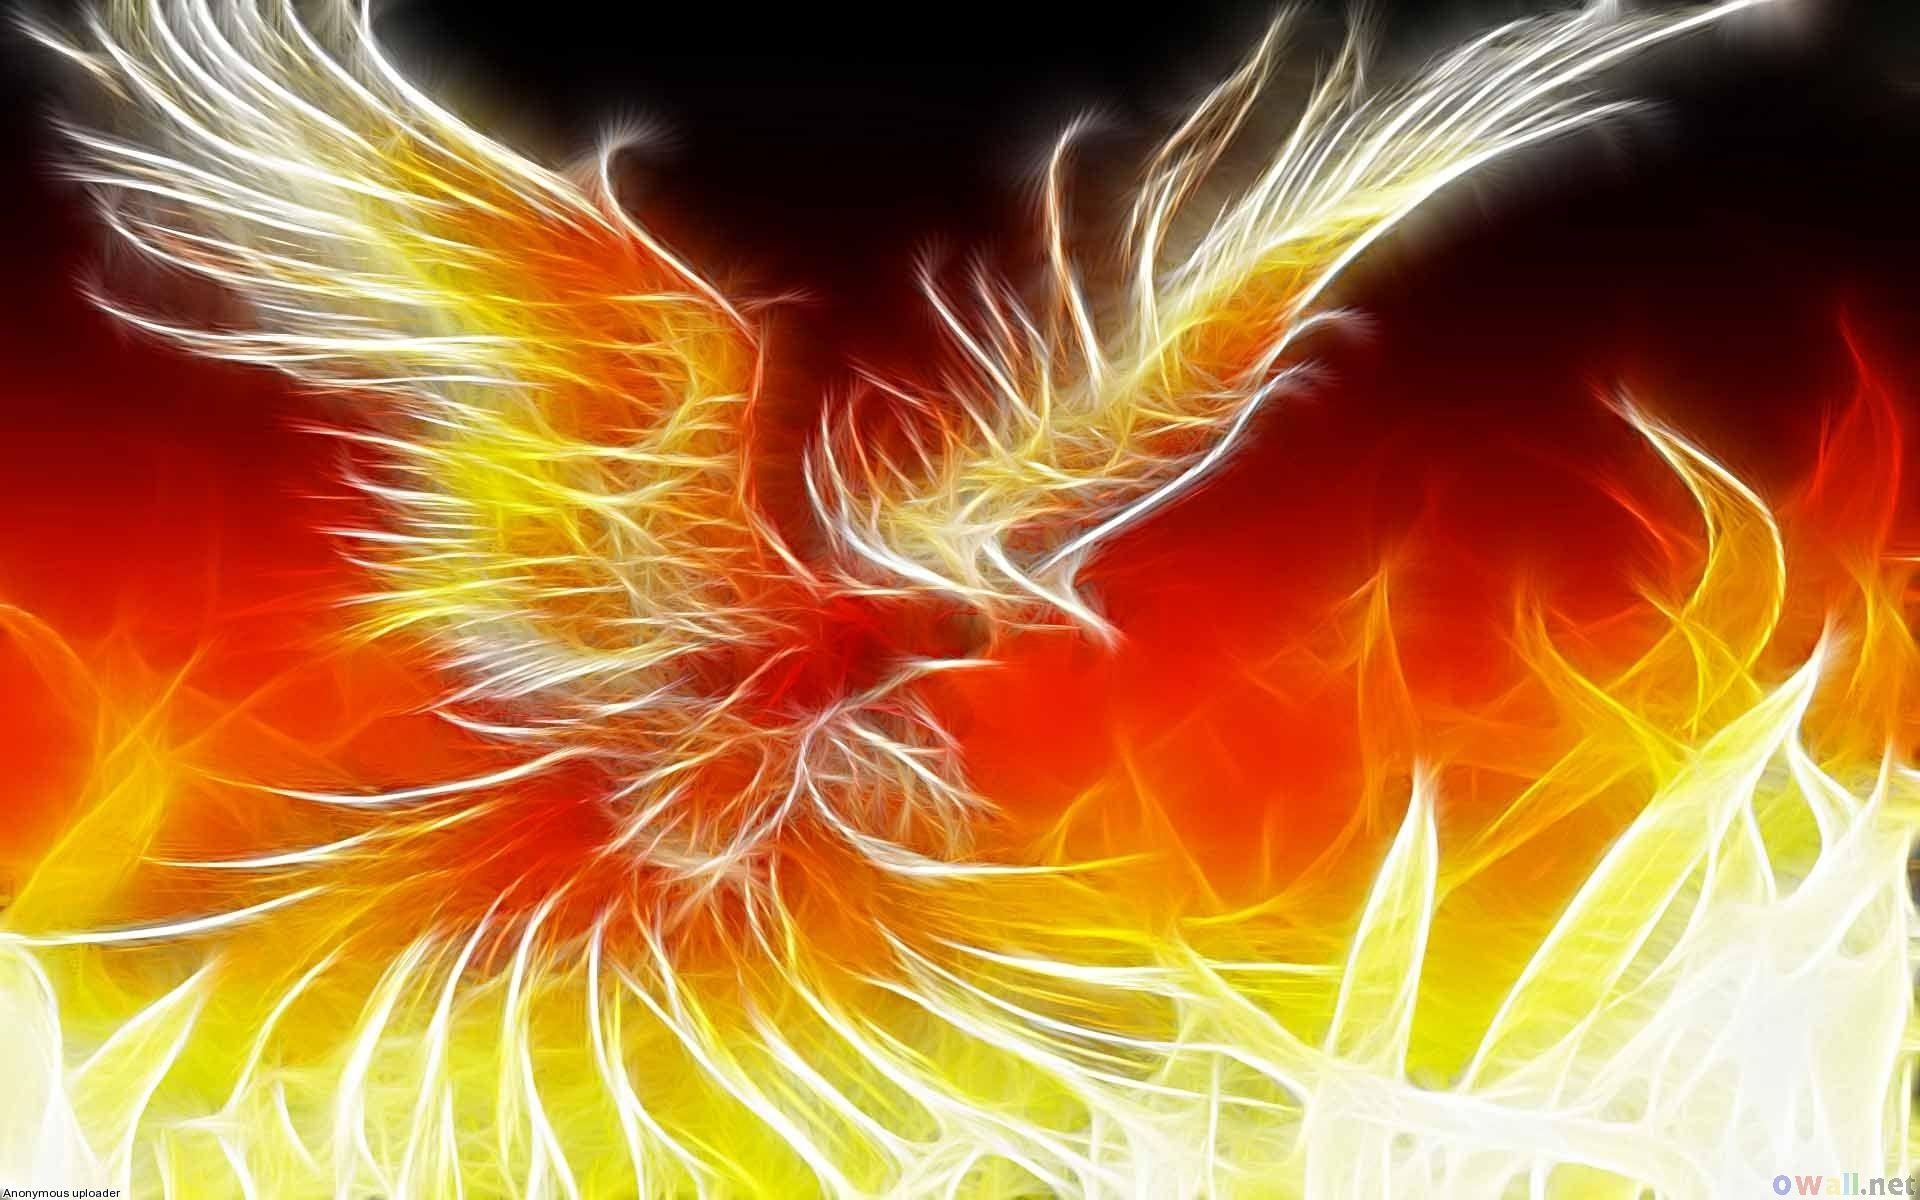 Phoenix Image. Beautiful image HD Picture & Desktop Wallpaper